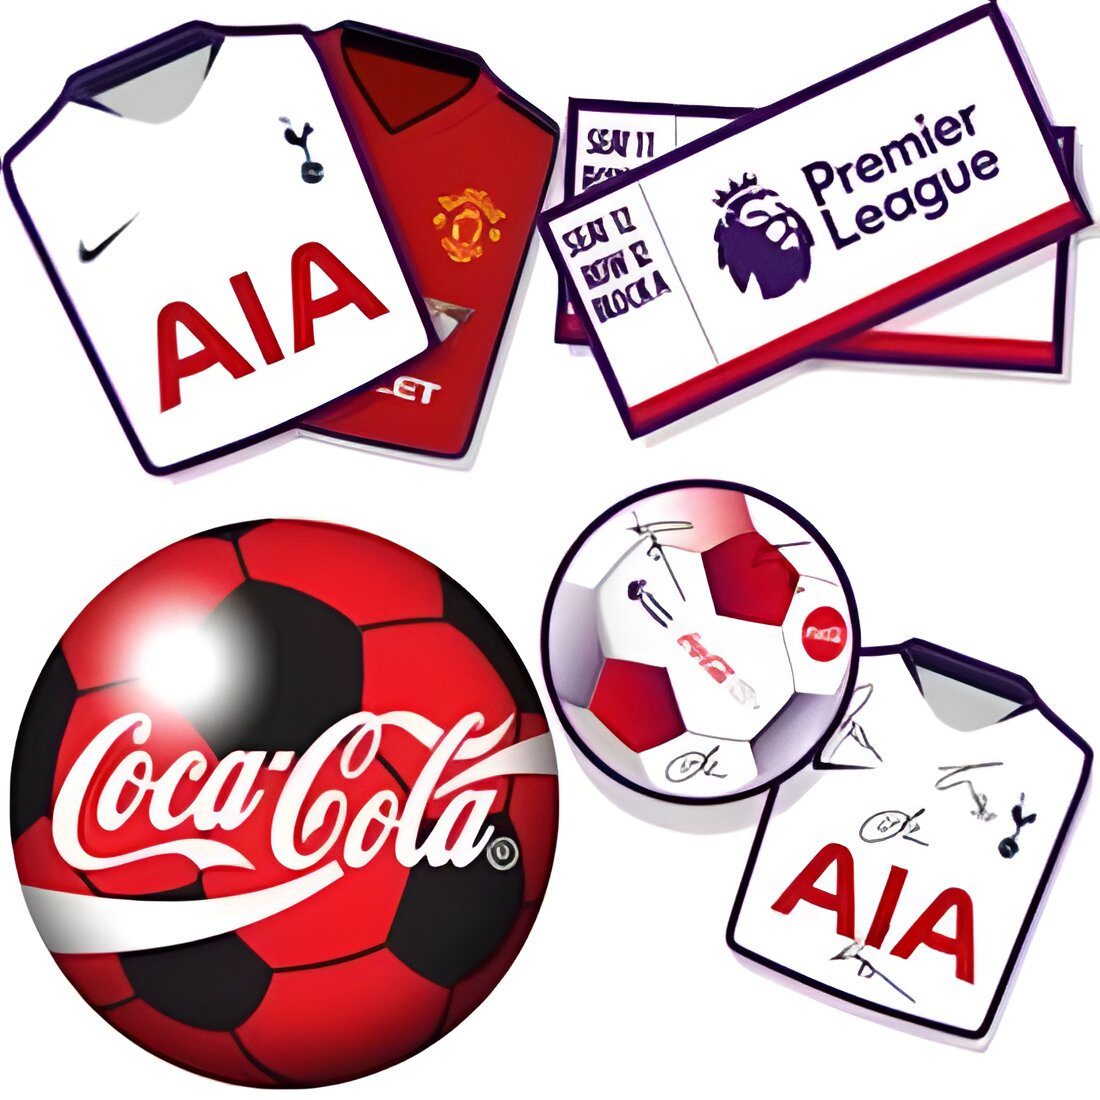 Free Premier League Club Shirts and Footballs